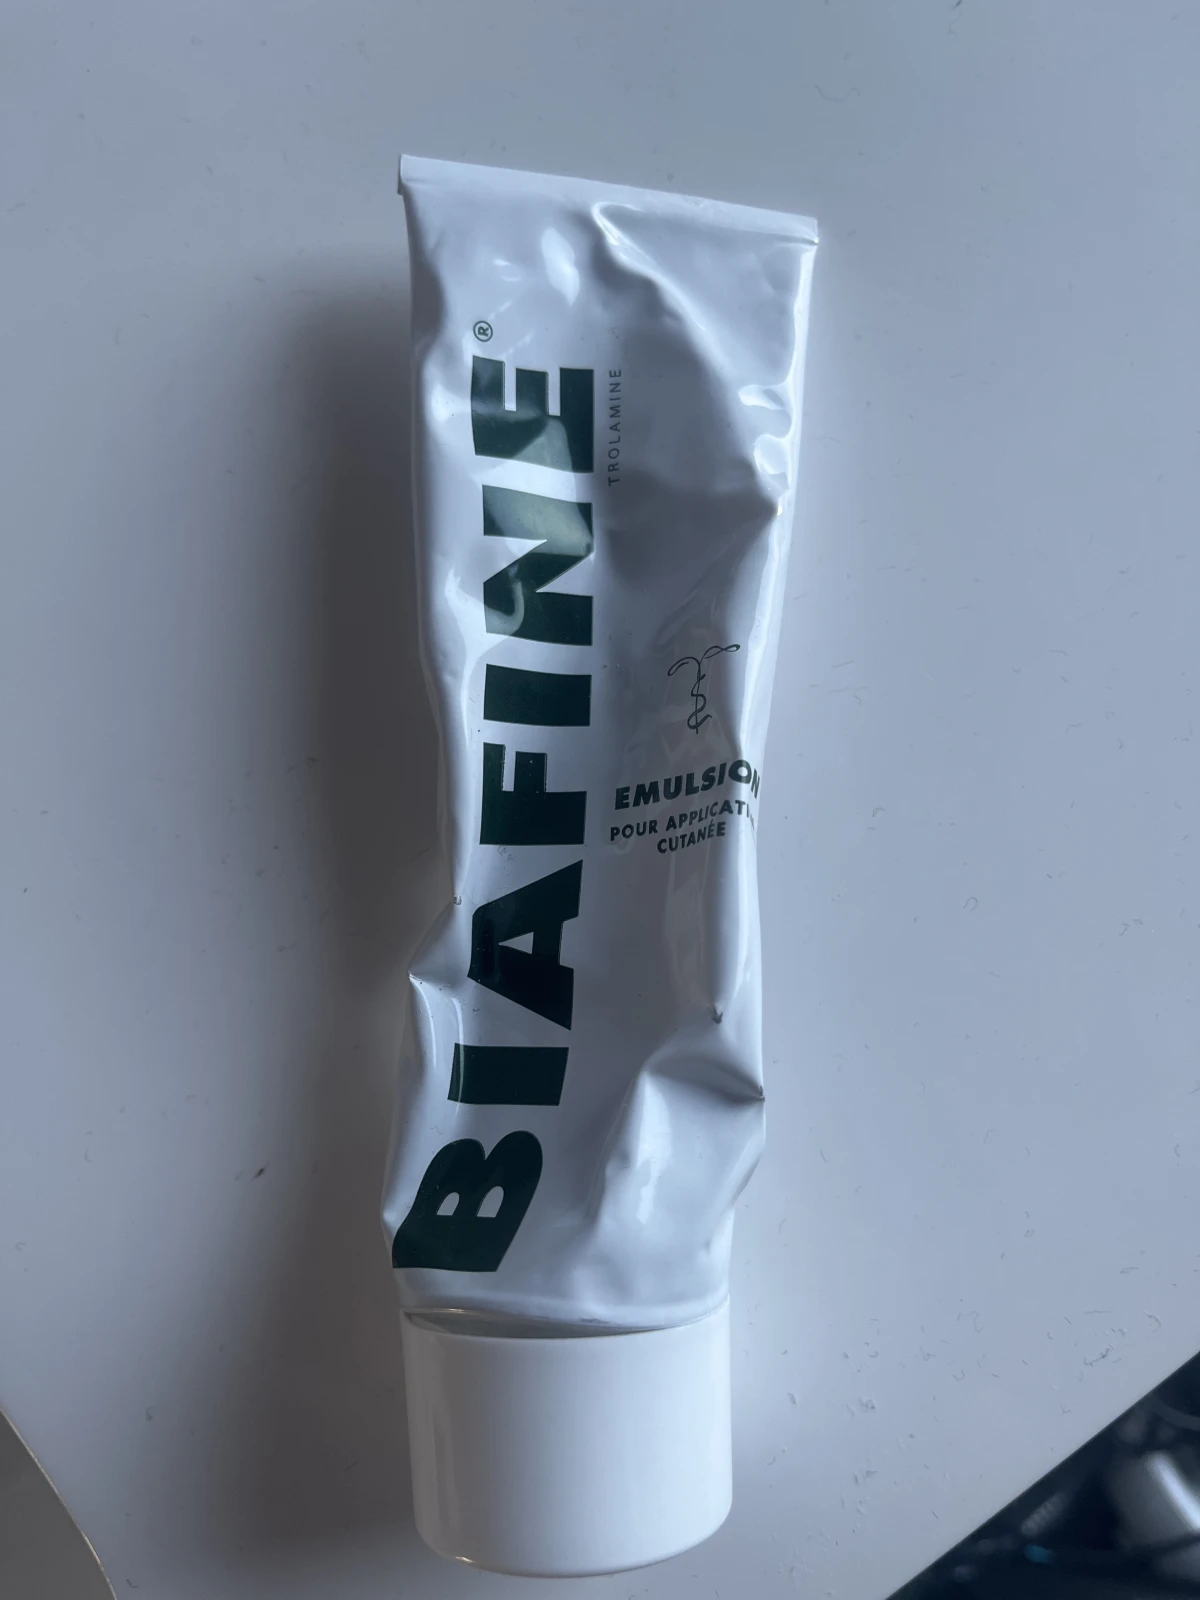 Biafine Emulsion 186g | Trolamine | Brandwondencrème - review image